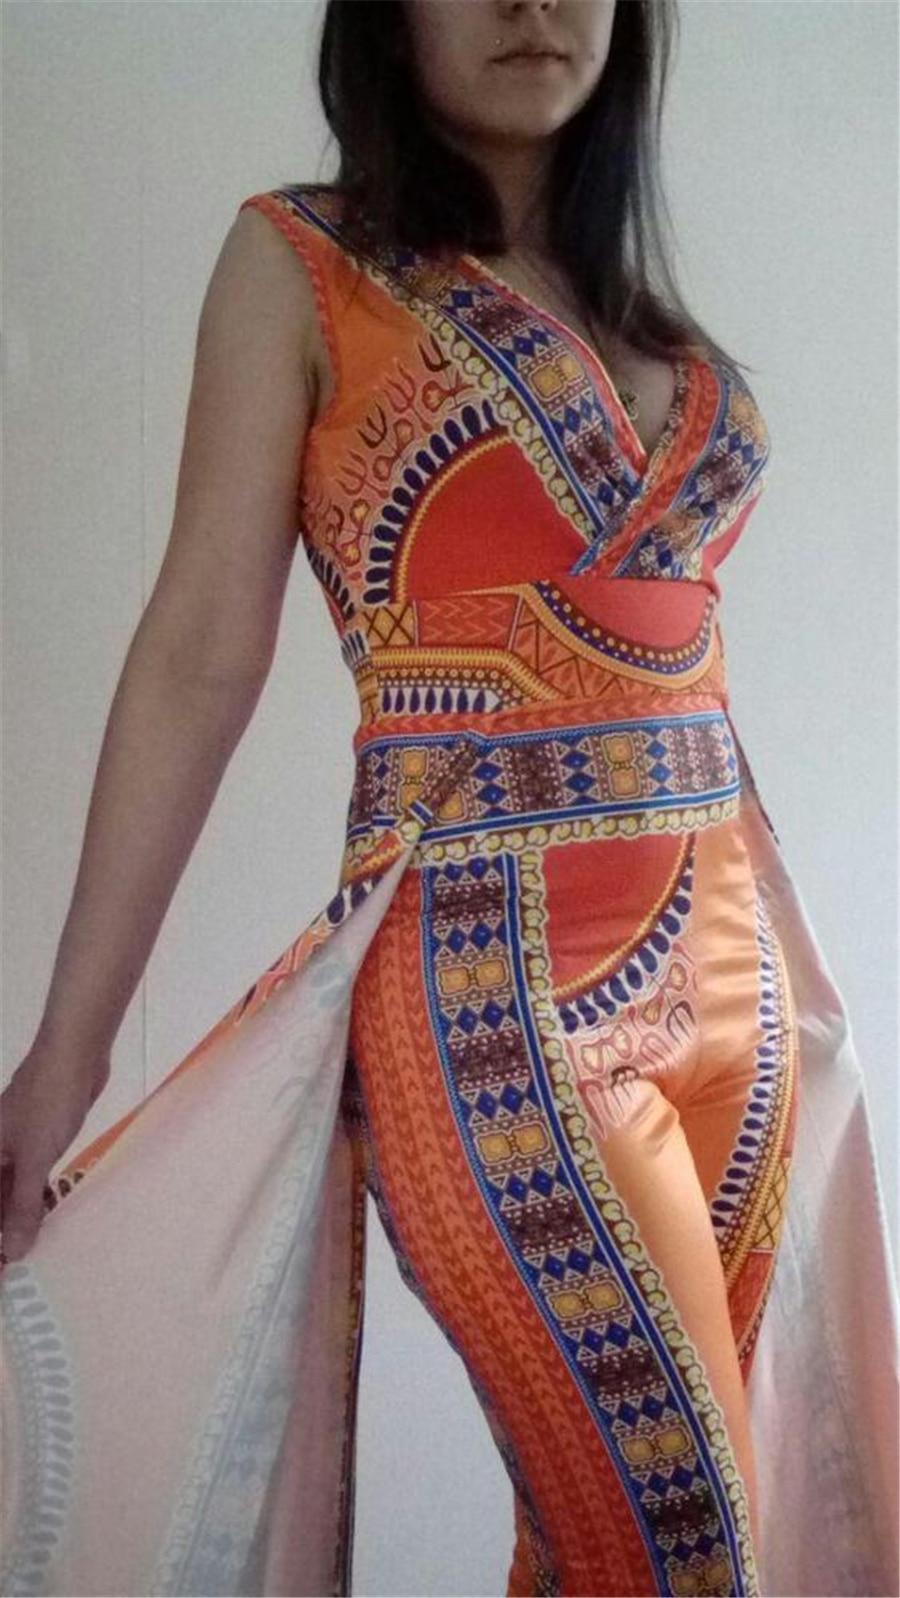 BAIBAZIN African Dresses for Women's Explosion Models Fashion Autumn Positioning Printing Orange Ethnic Pants